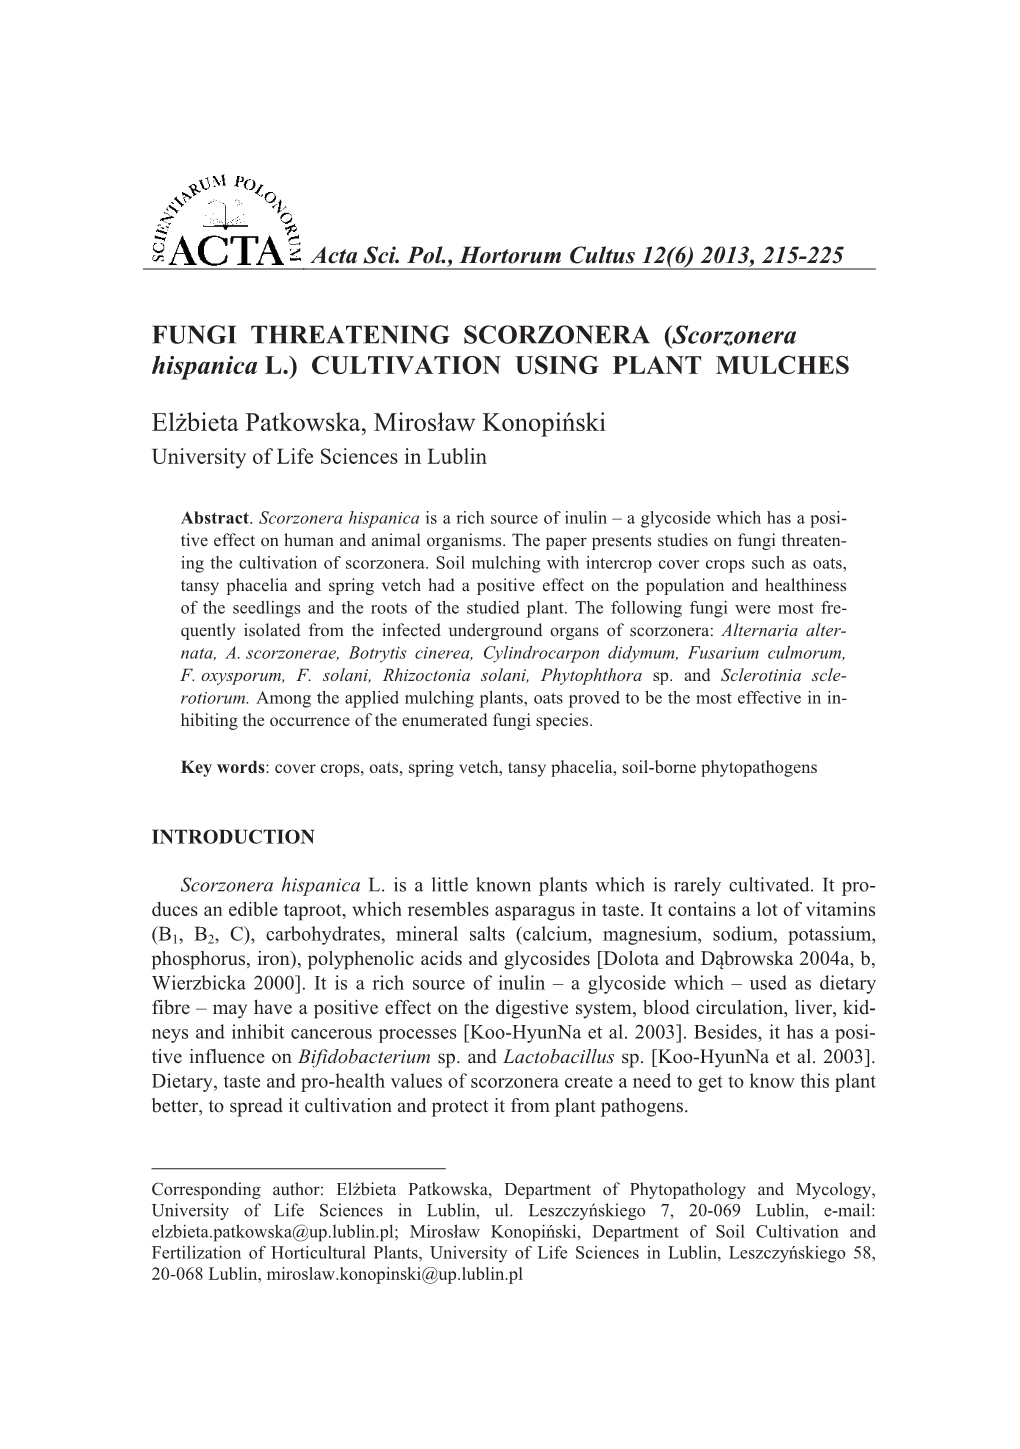 FUNGI THREATENING SCORZONERA (Scorzonera Hispanica L.) CULTIVATION USING PLANT MULCHES